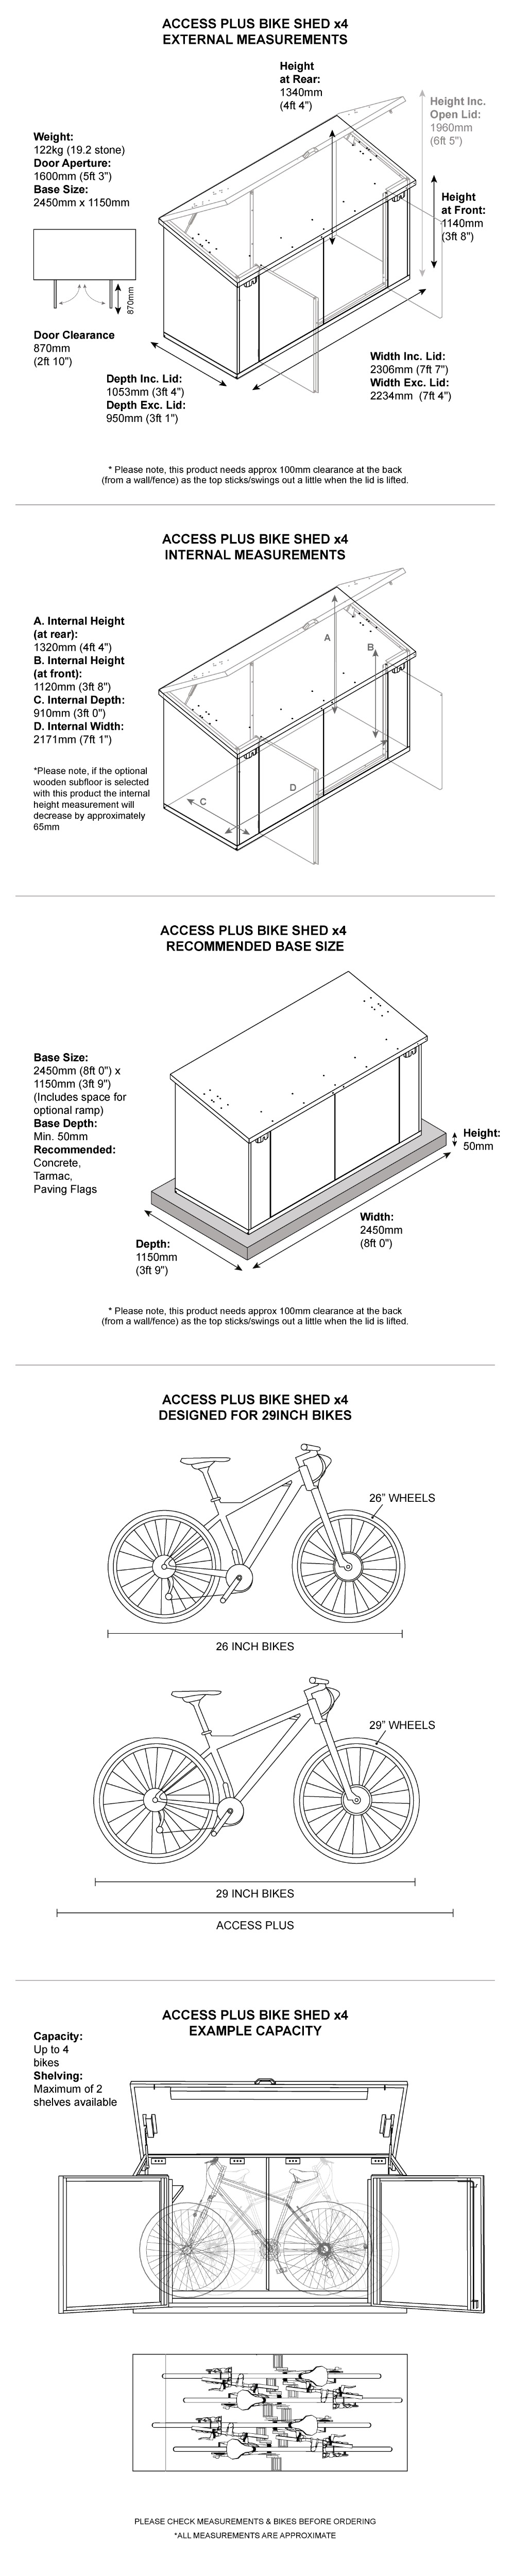 Access 8x4 bike shed